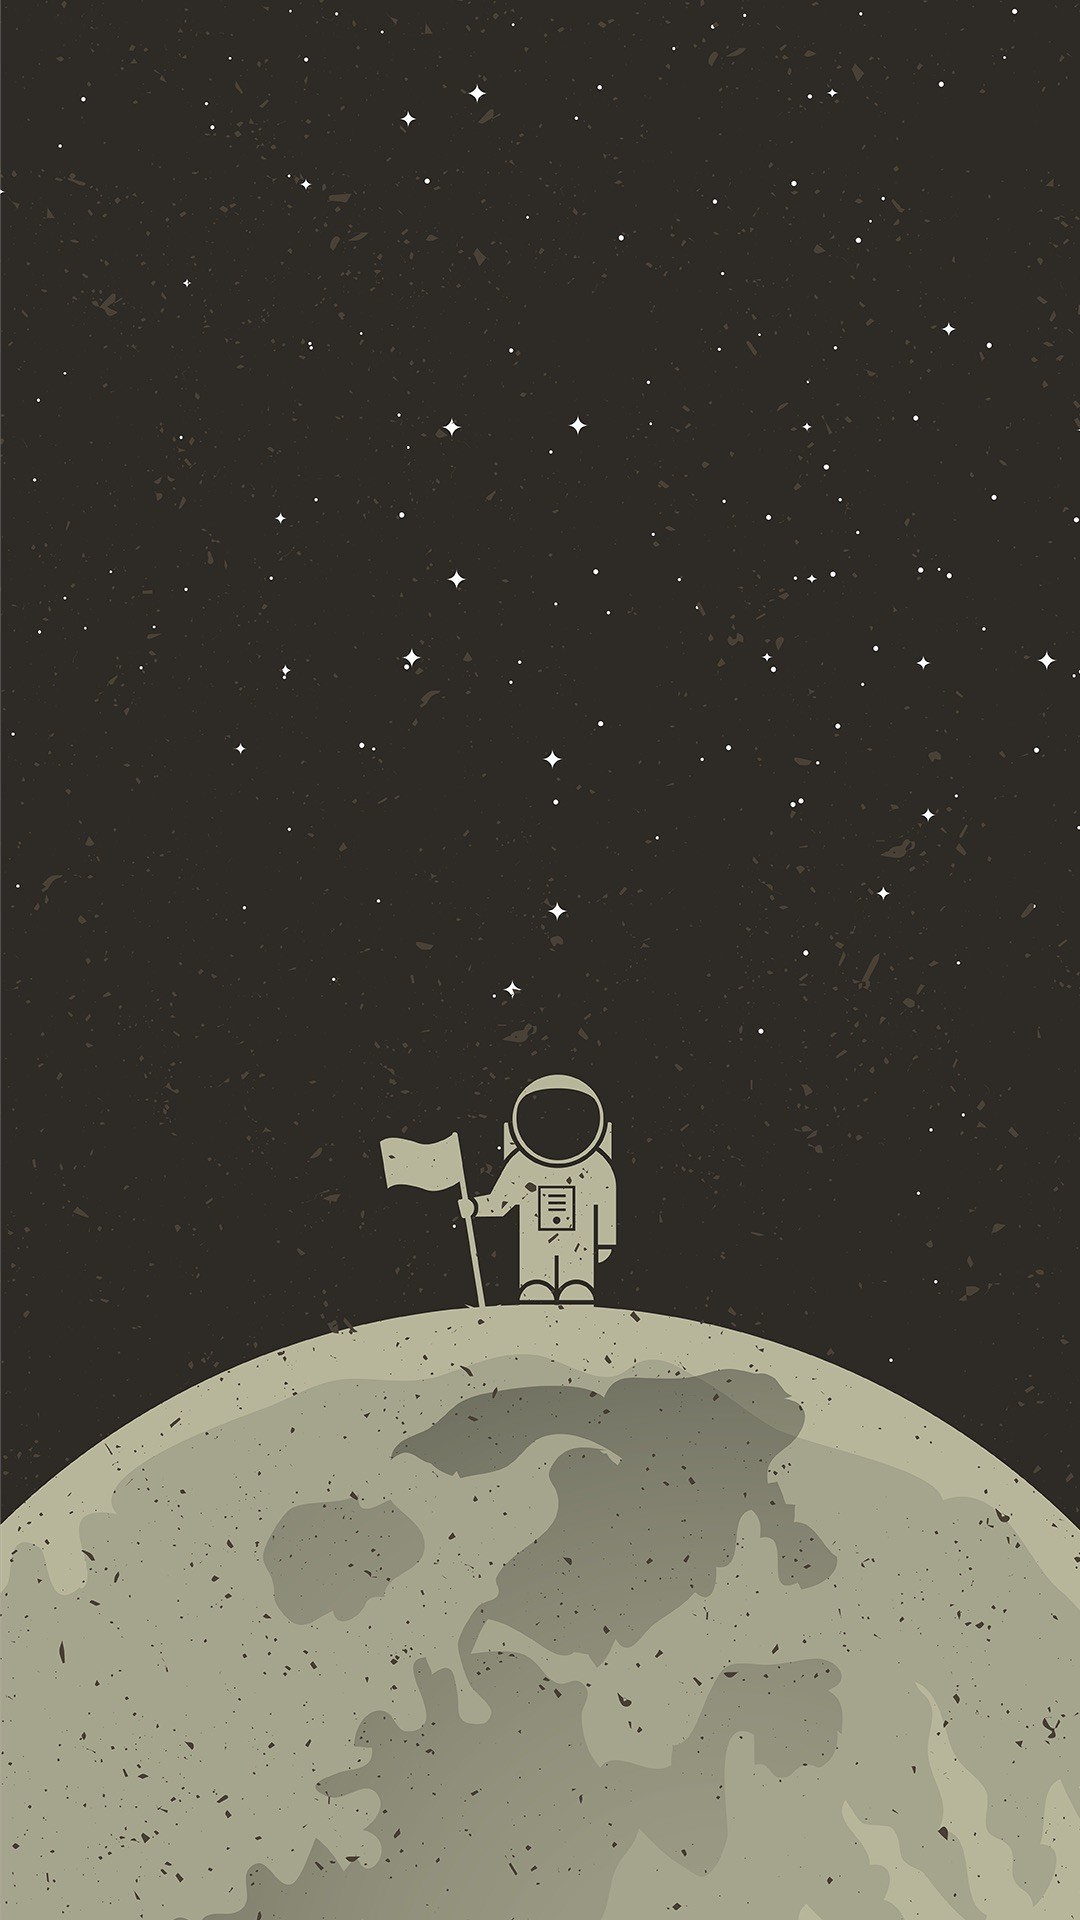 General 1080x1920 digital art portrait display simple background minimalism space universe planet stars astronaut spacesuit helmet flag monochrome Moon